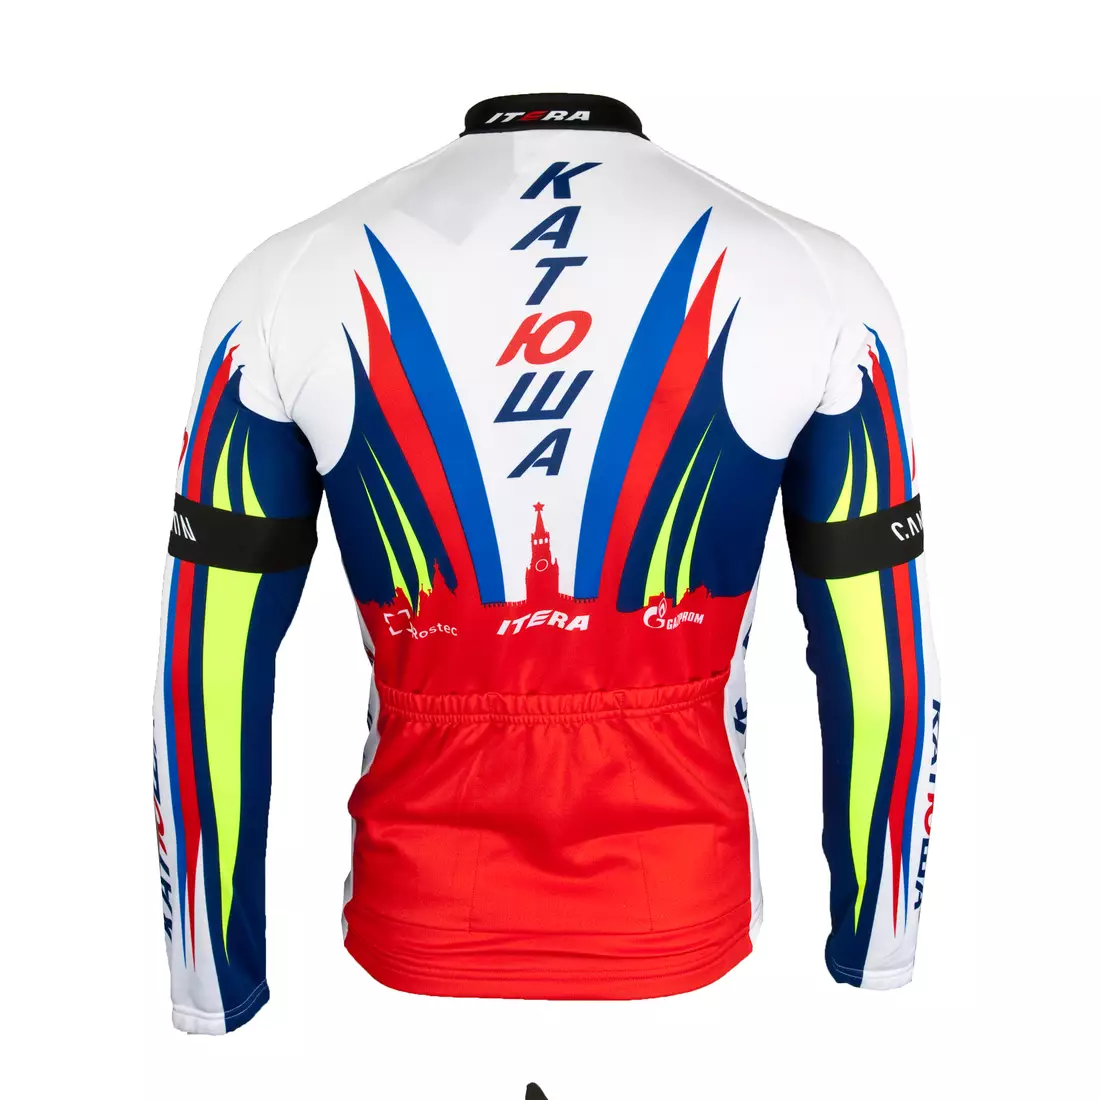 KATUSHA 2015 cycling sweatshirt